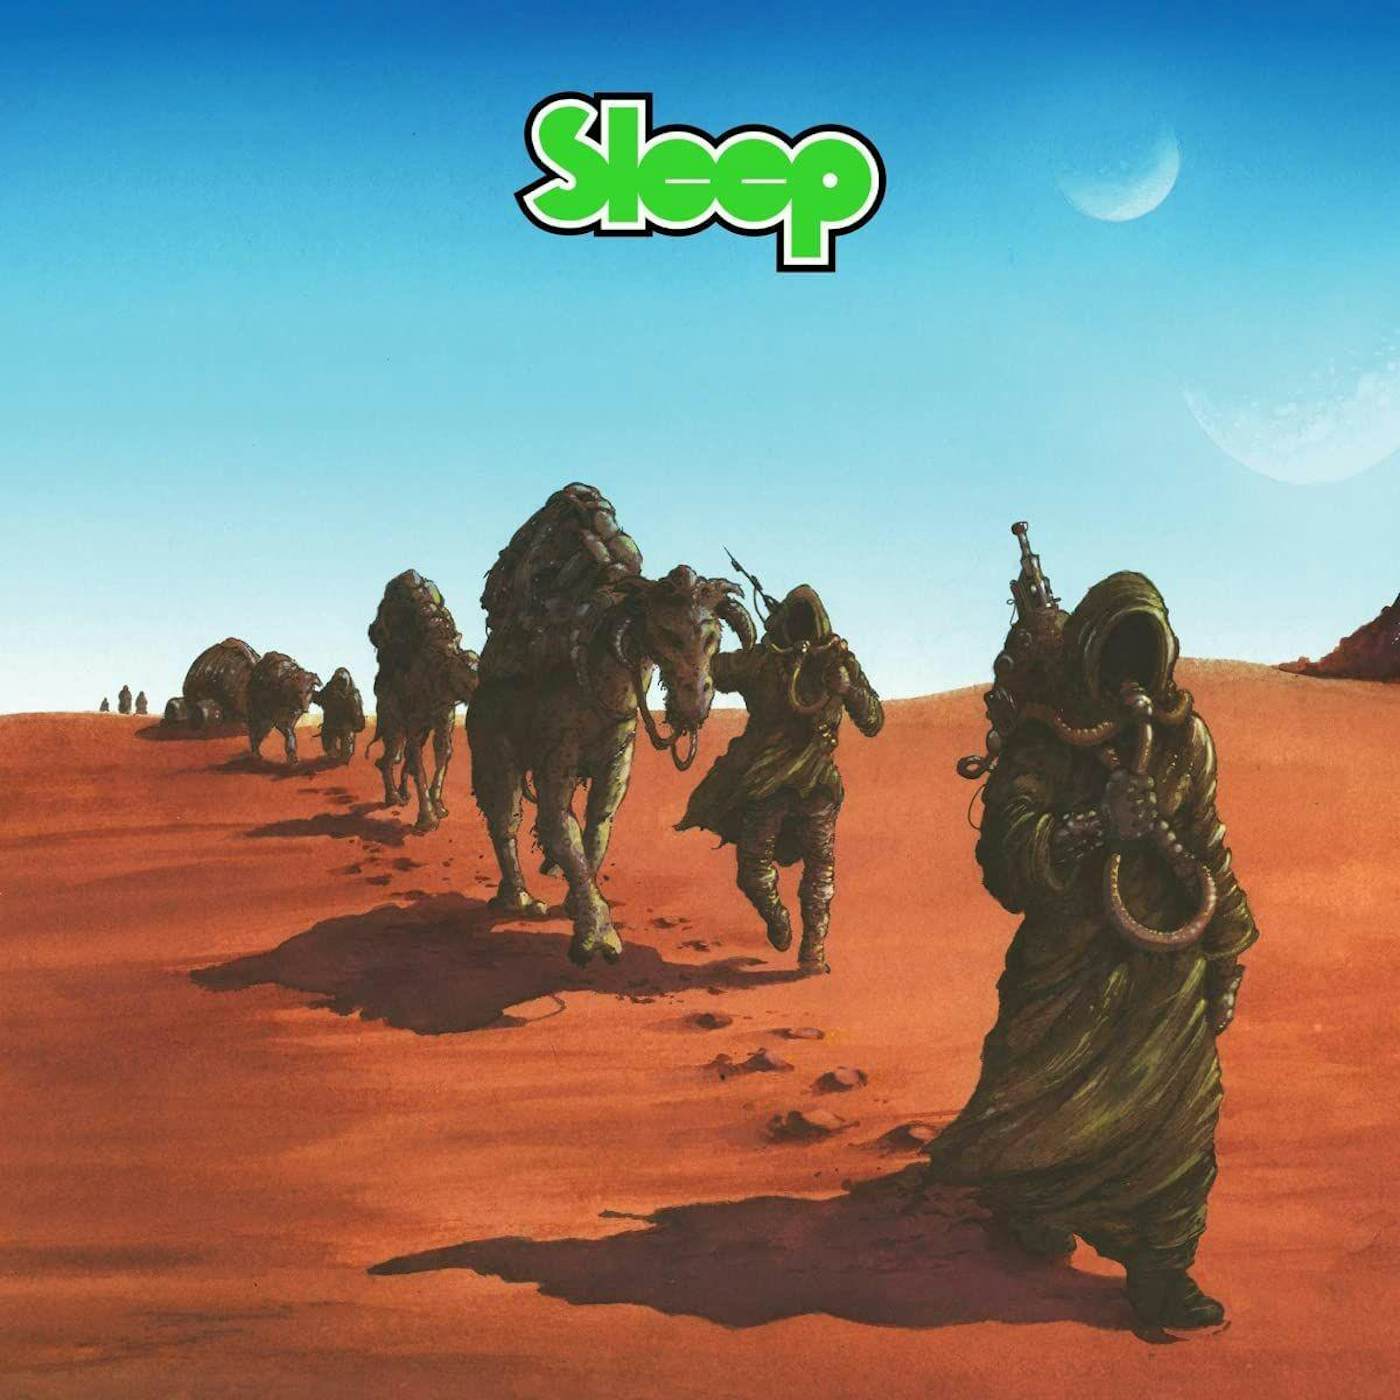 Sleep Dopesmoker Vinyl Record